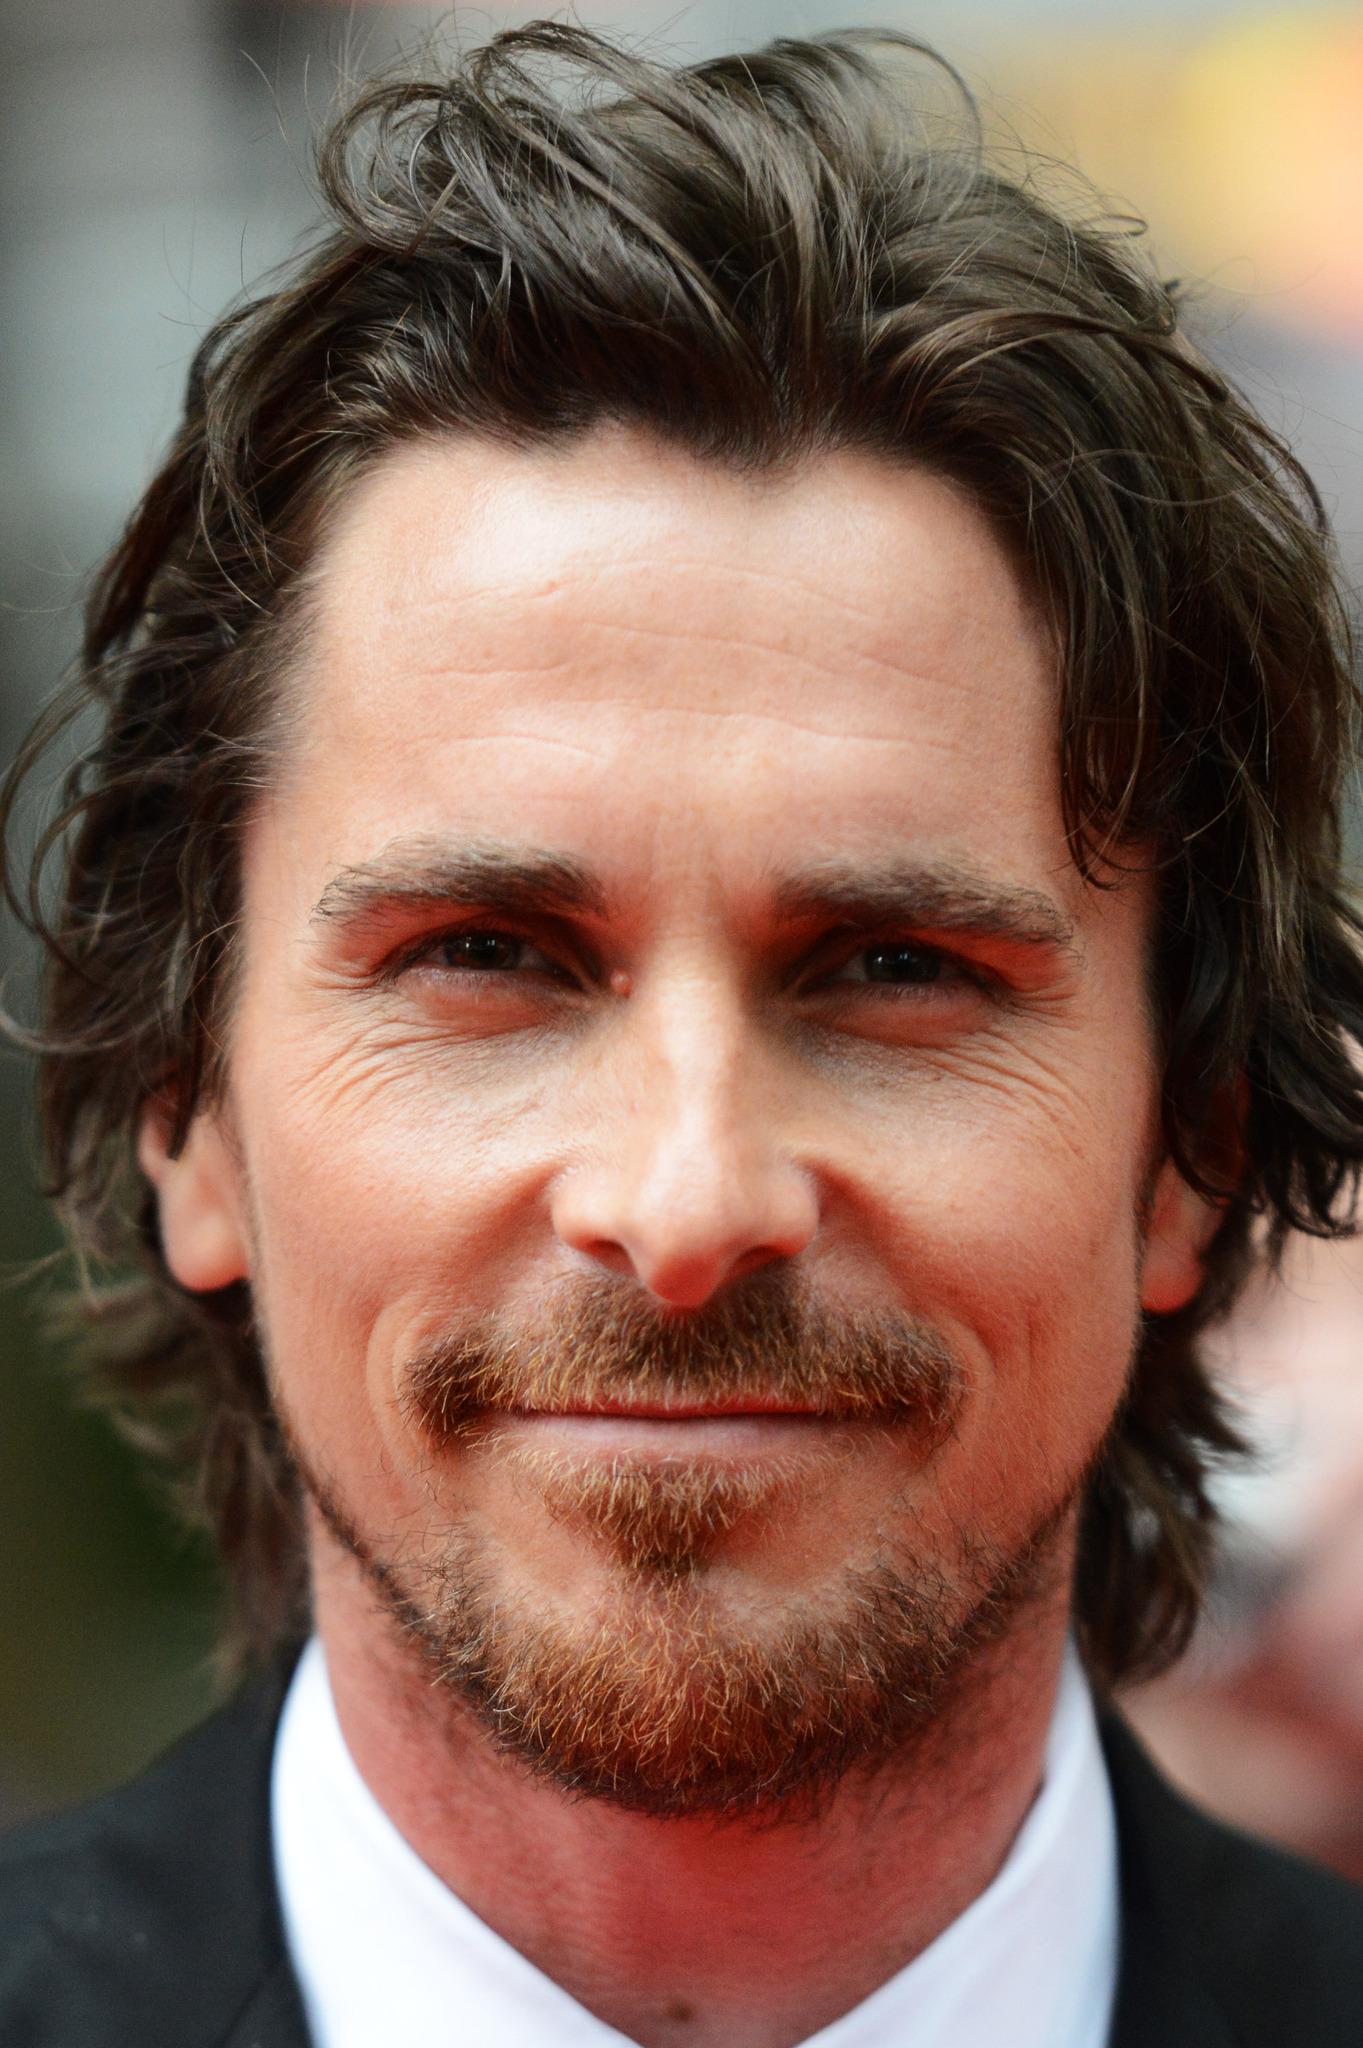 Christian Bale image